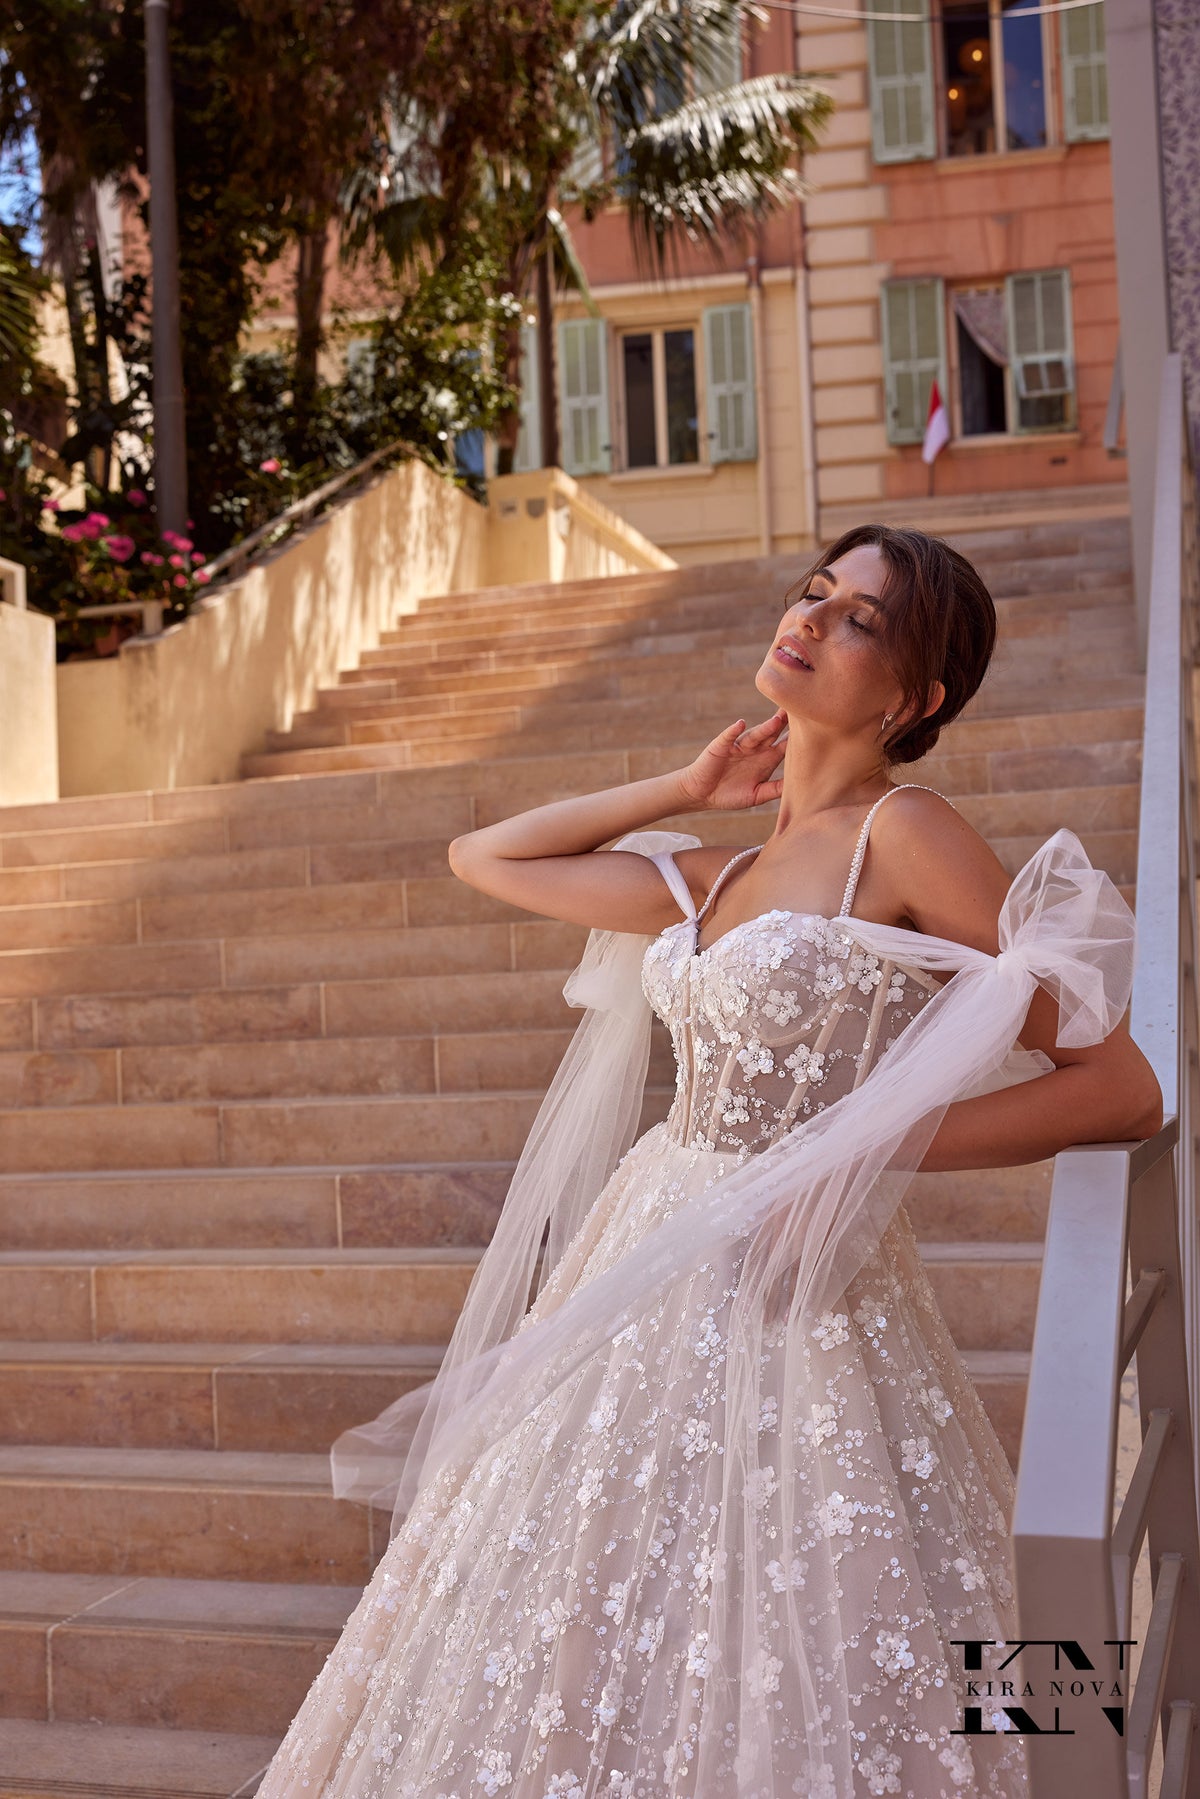 Off The Shoulder Romantic Sleeveless Straps Wedding Dress Bridal Gown Aline Floral Unique Design Open Back Full Skirt Short Train Style